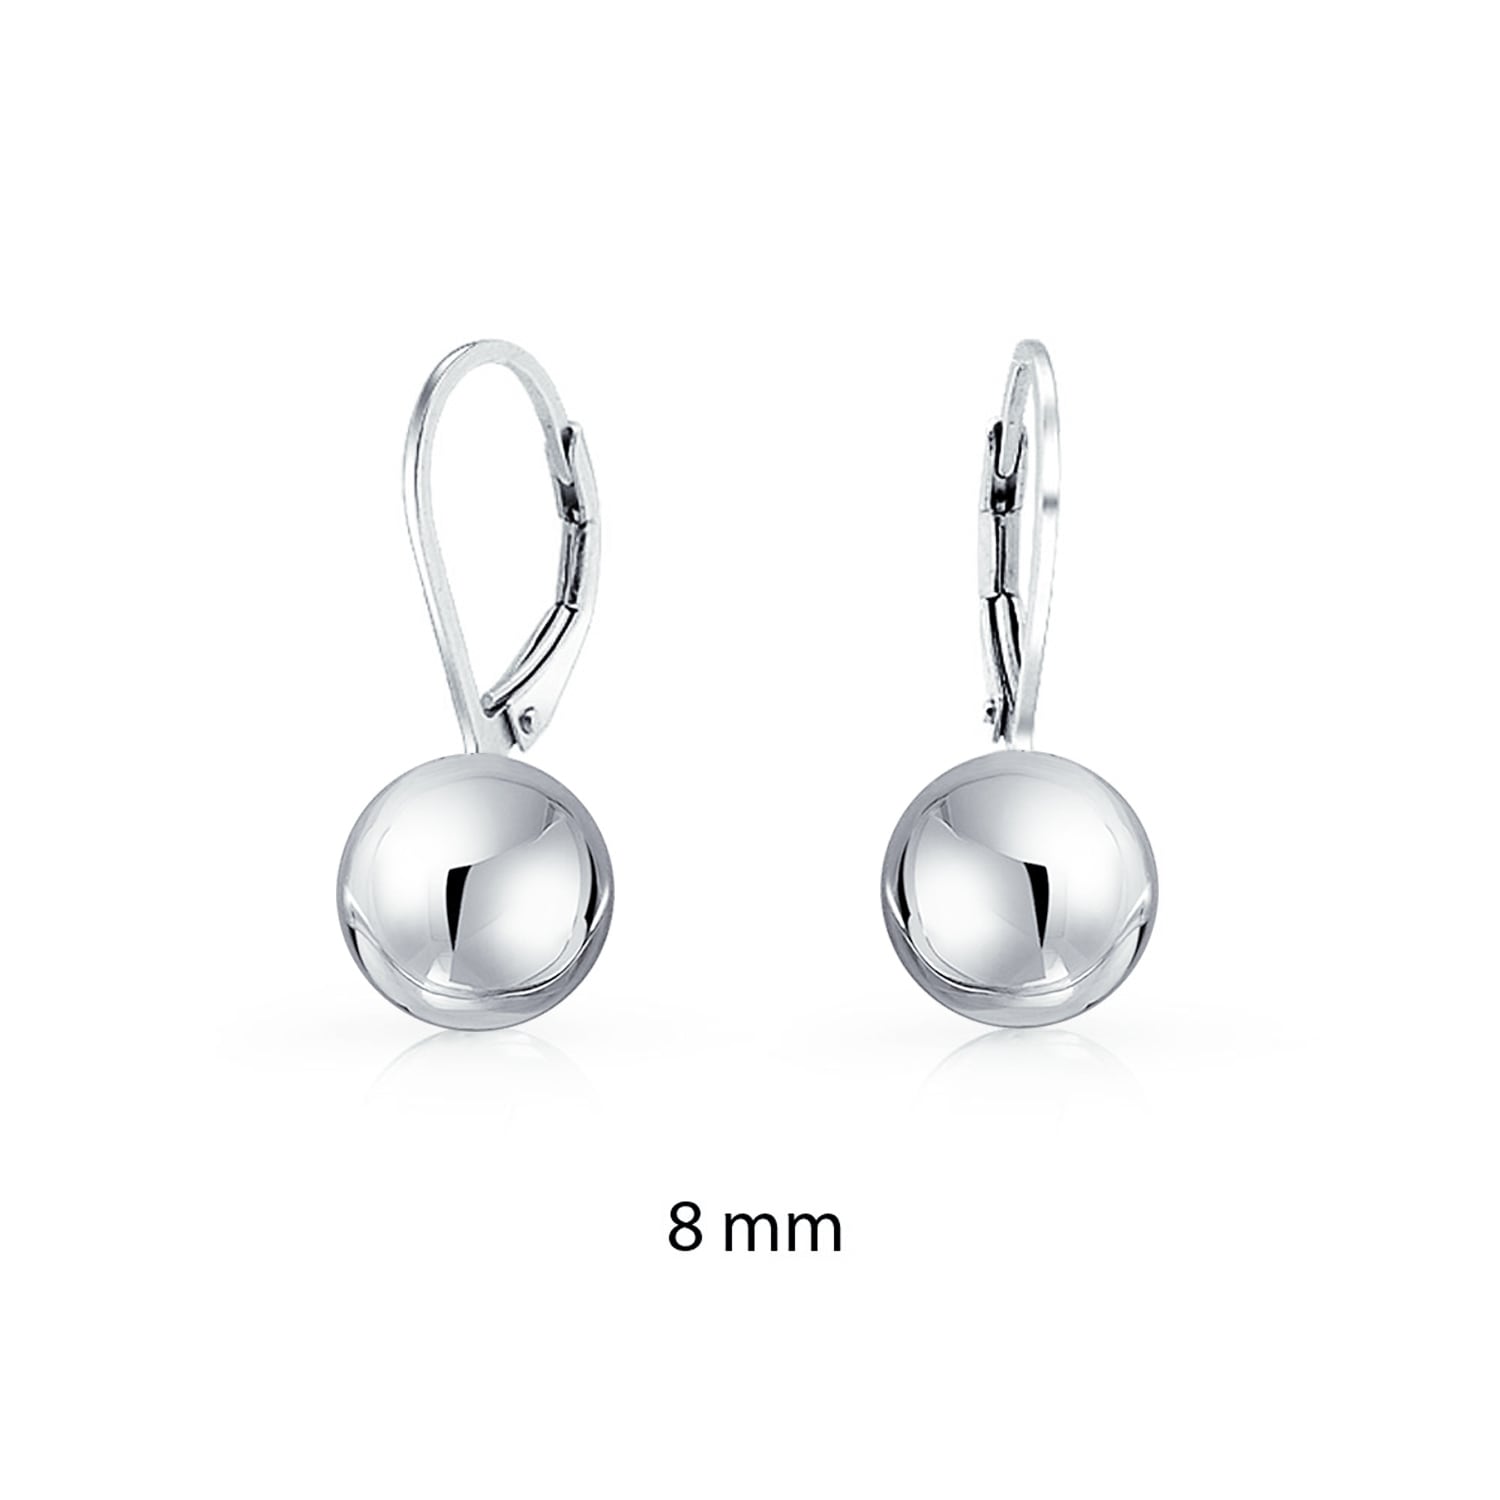 925 Sterling Silver 14mm Ball Drop Dangle Chandelier Leverback Earrings Lever Back Fine Jewelry Gifts For Women For Her